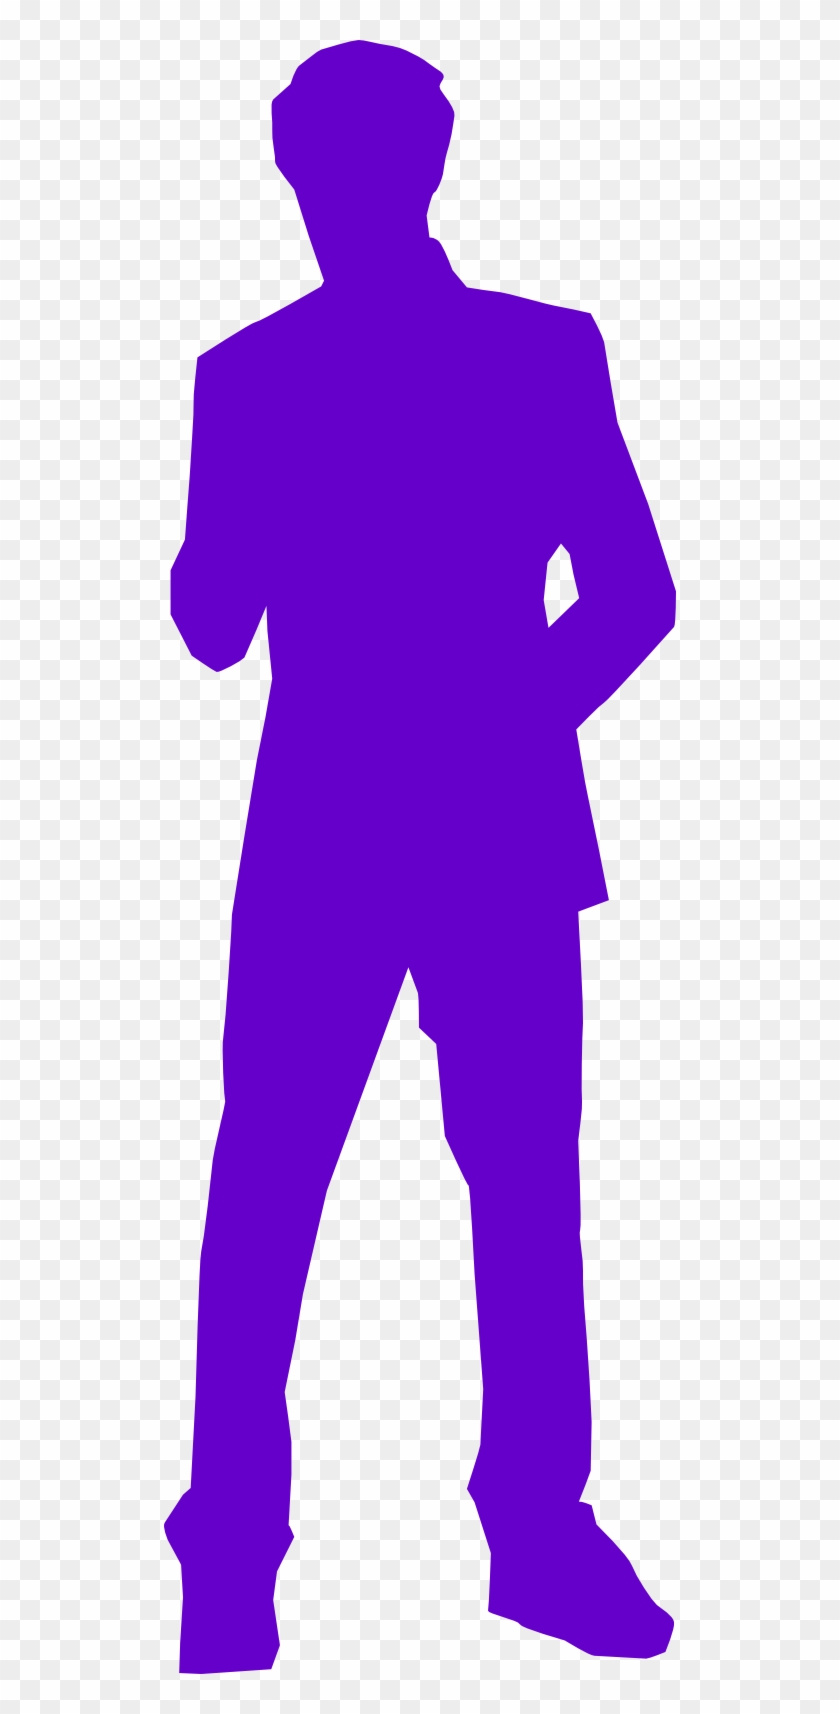 Man In A Suit - Purple Man Silhouette #262566